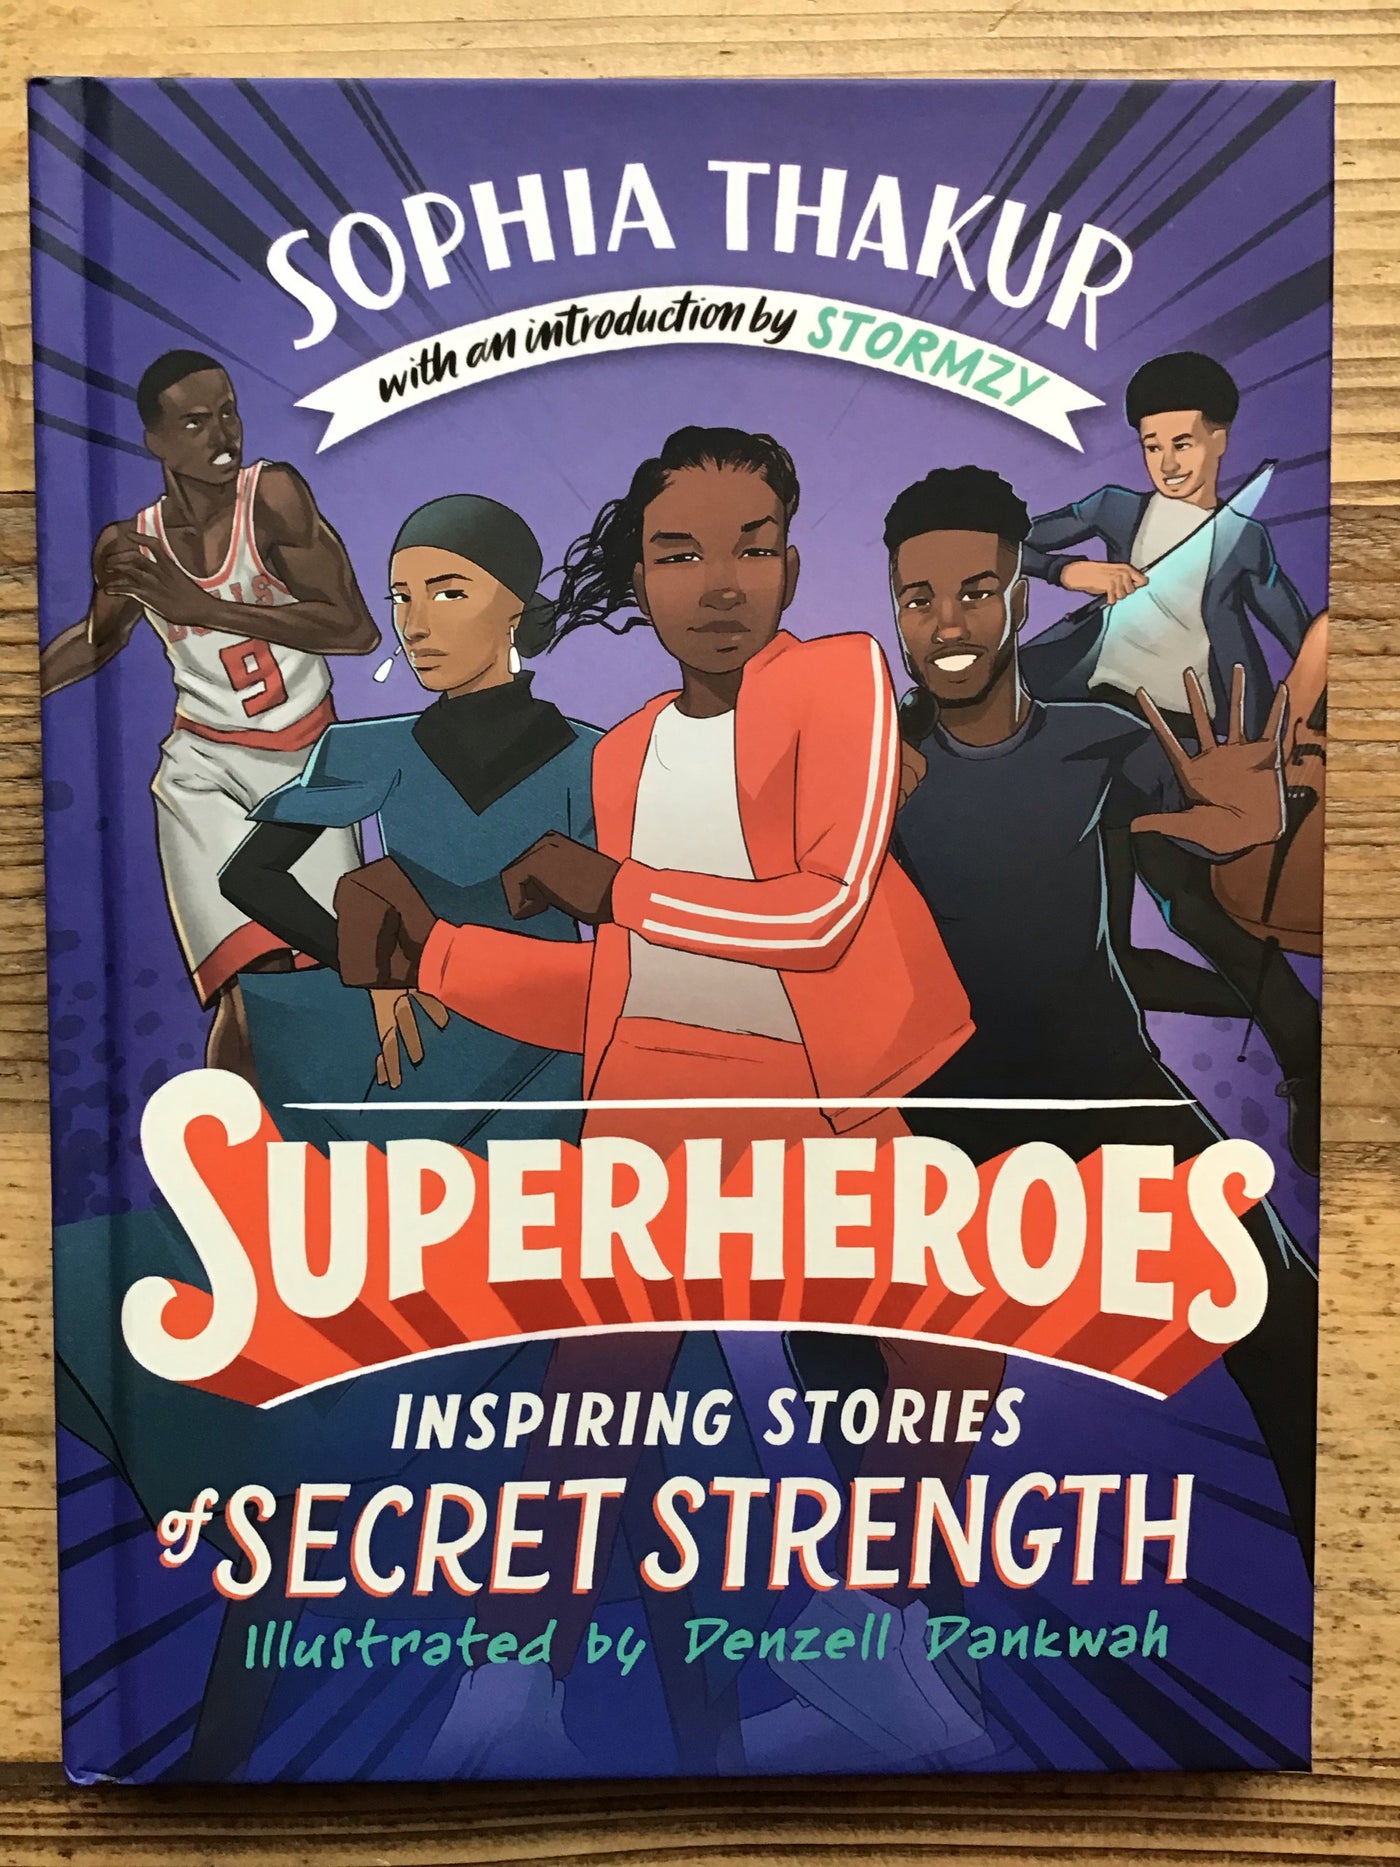 Superheroes : Inspiring Stories of Secret Strength